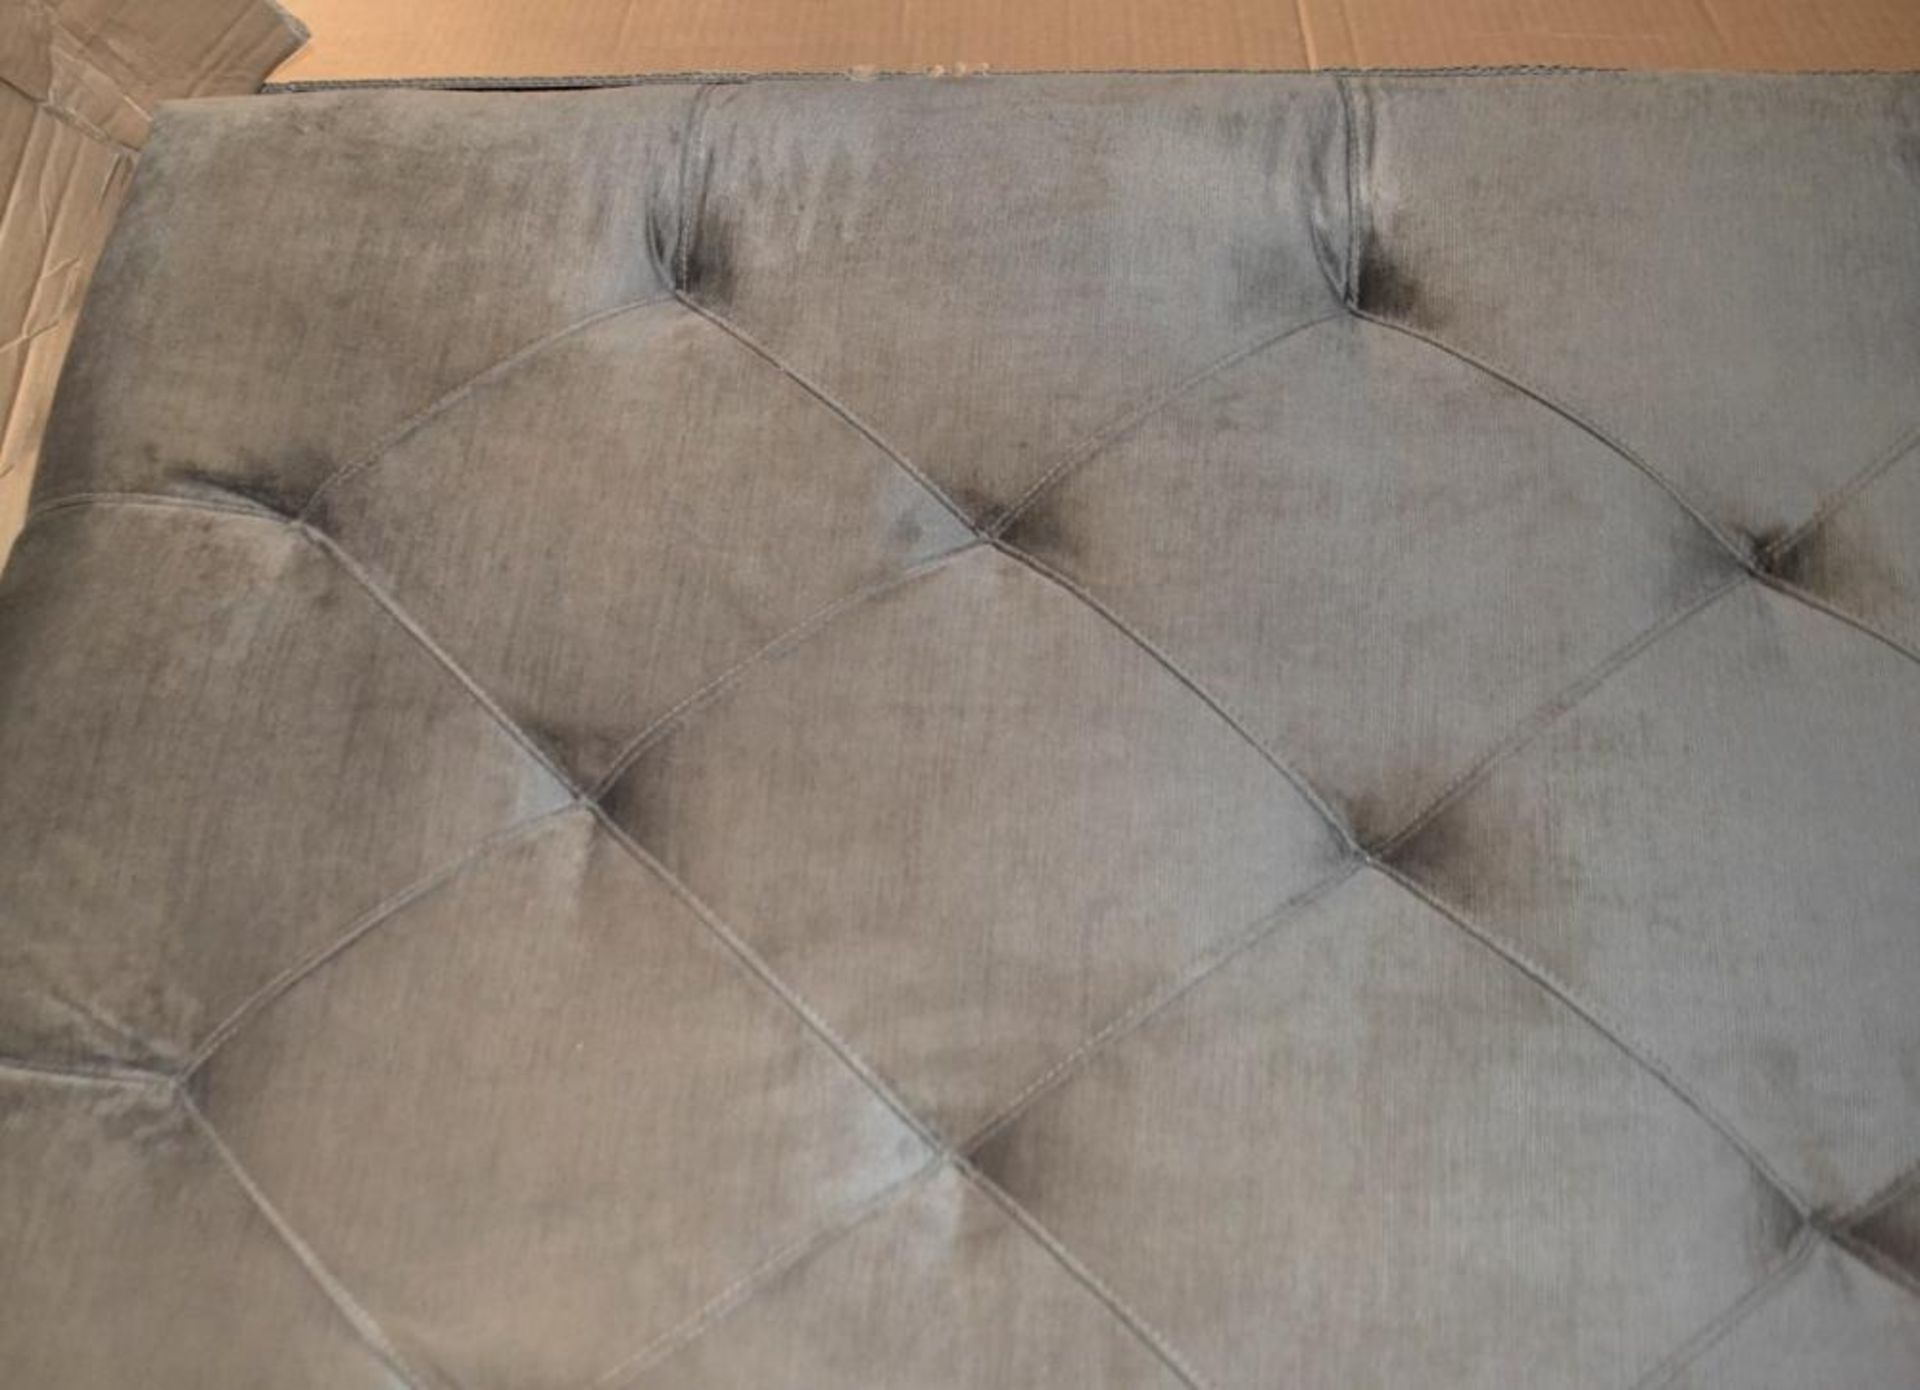 1 x Eichholtz 'Cesare ' Chesterfield-Inspired Upholstered Headboard In A Granite Grey Velvet - Dime - Image 10 of 10